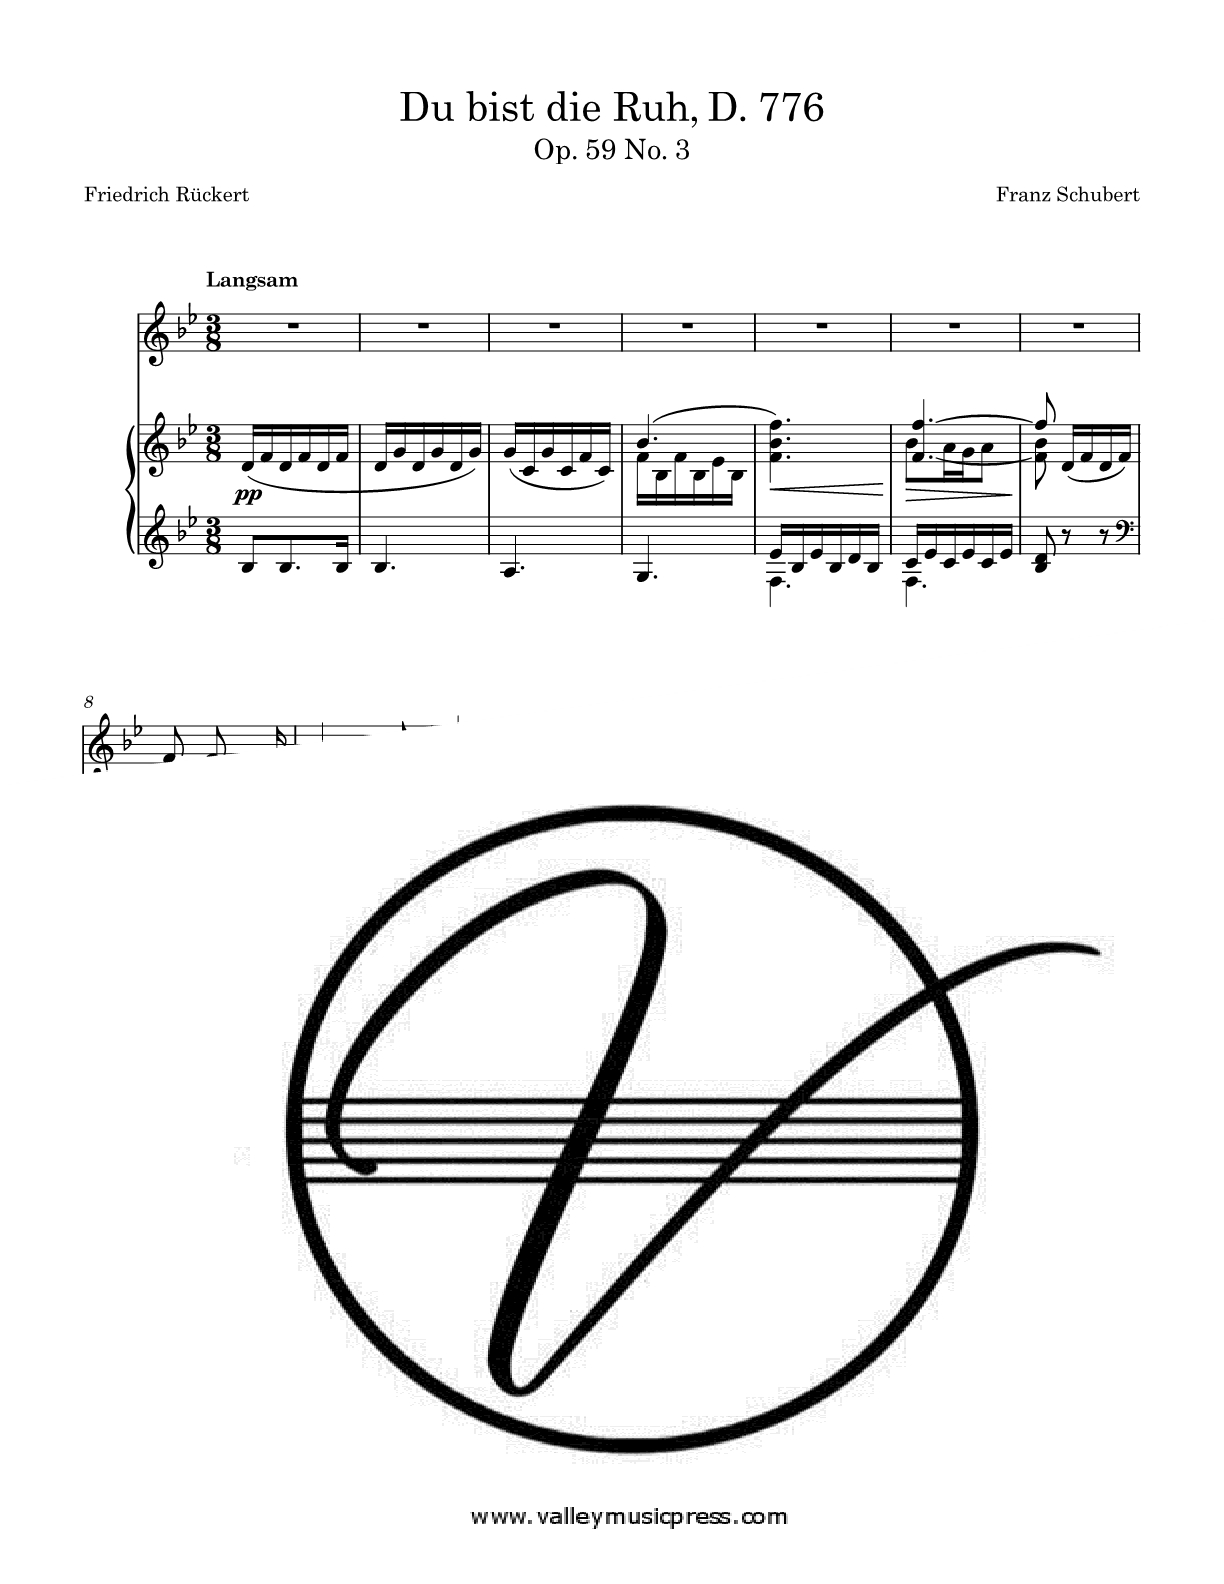 Schubert - Du bist die Ruh Op. 59 No. 3 D. 776 (Voice)